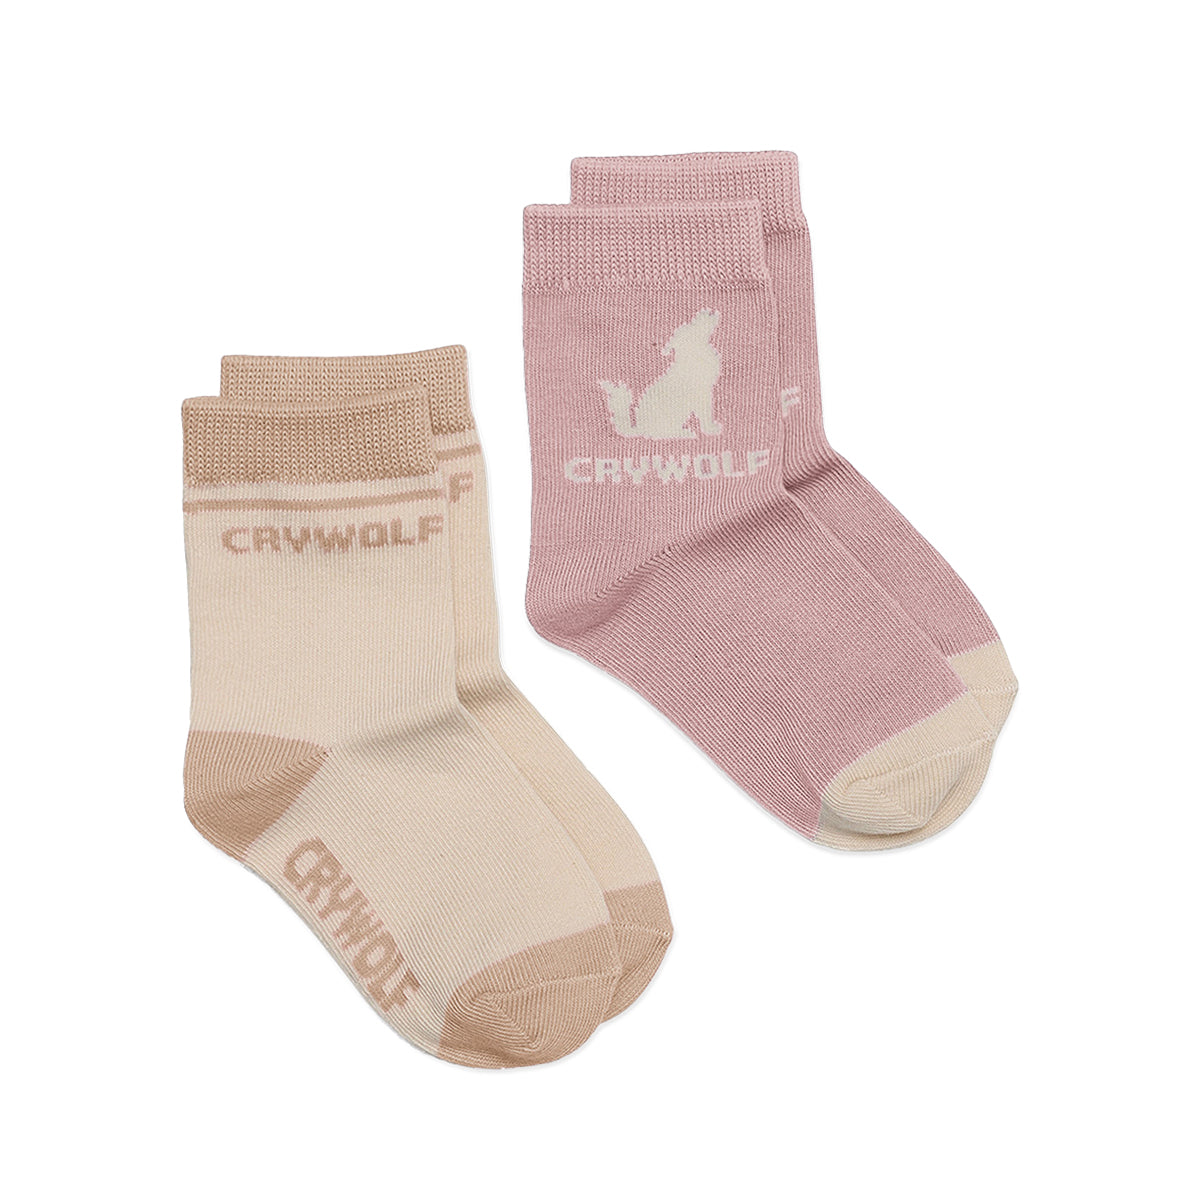 Crywolf | Socks 2pk - Blush & Camel